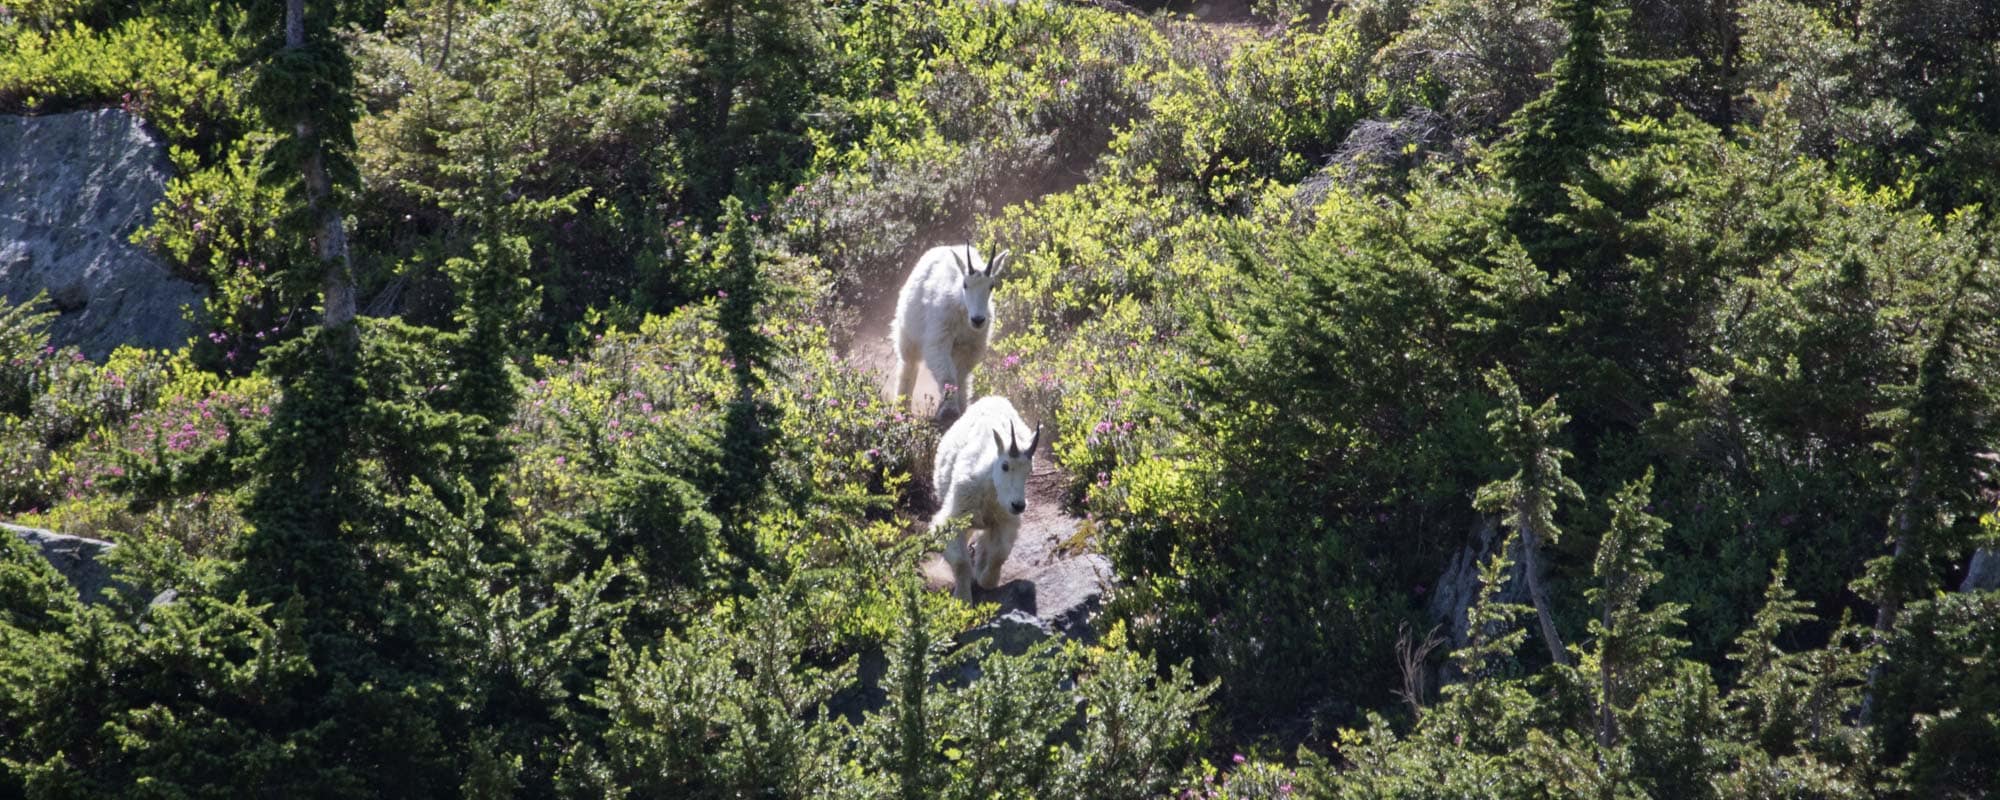 North Cascades National Park, Washington - Banner Mountain Goats